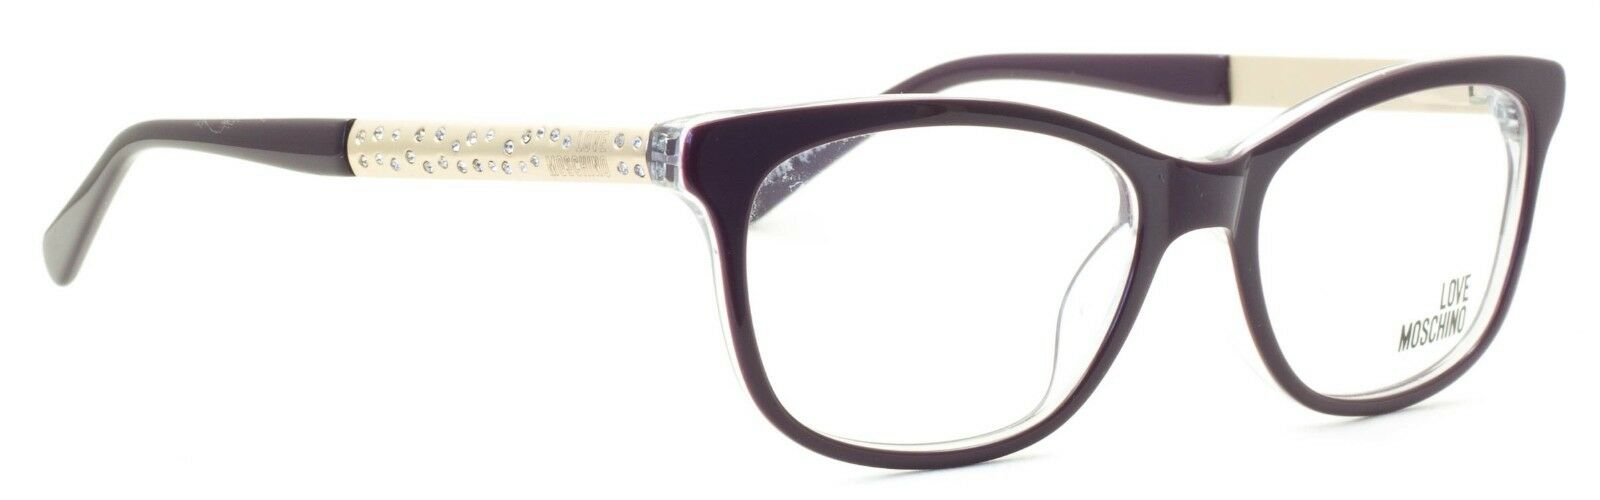 MOSCHINO LM 10 30400238 52mm Eyewear FRAMES RX Optical Glasses Eyeglasses - New